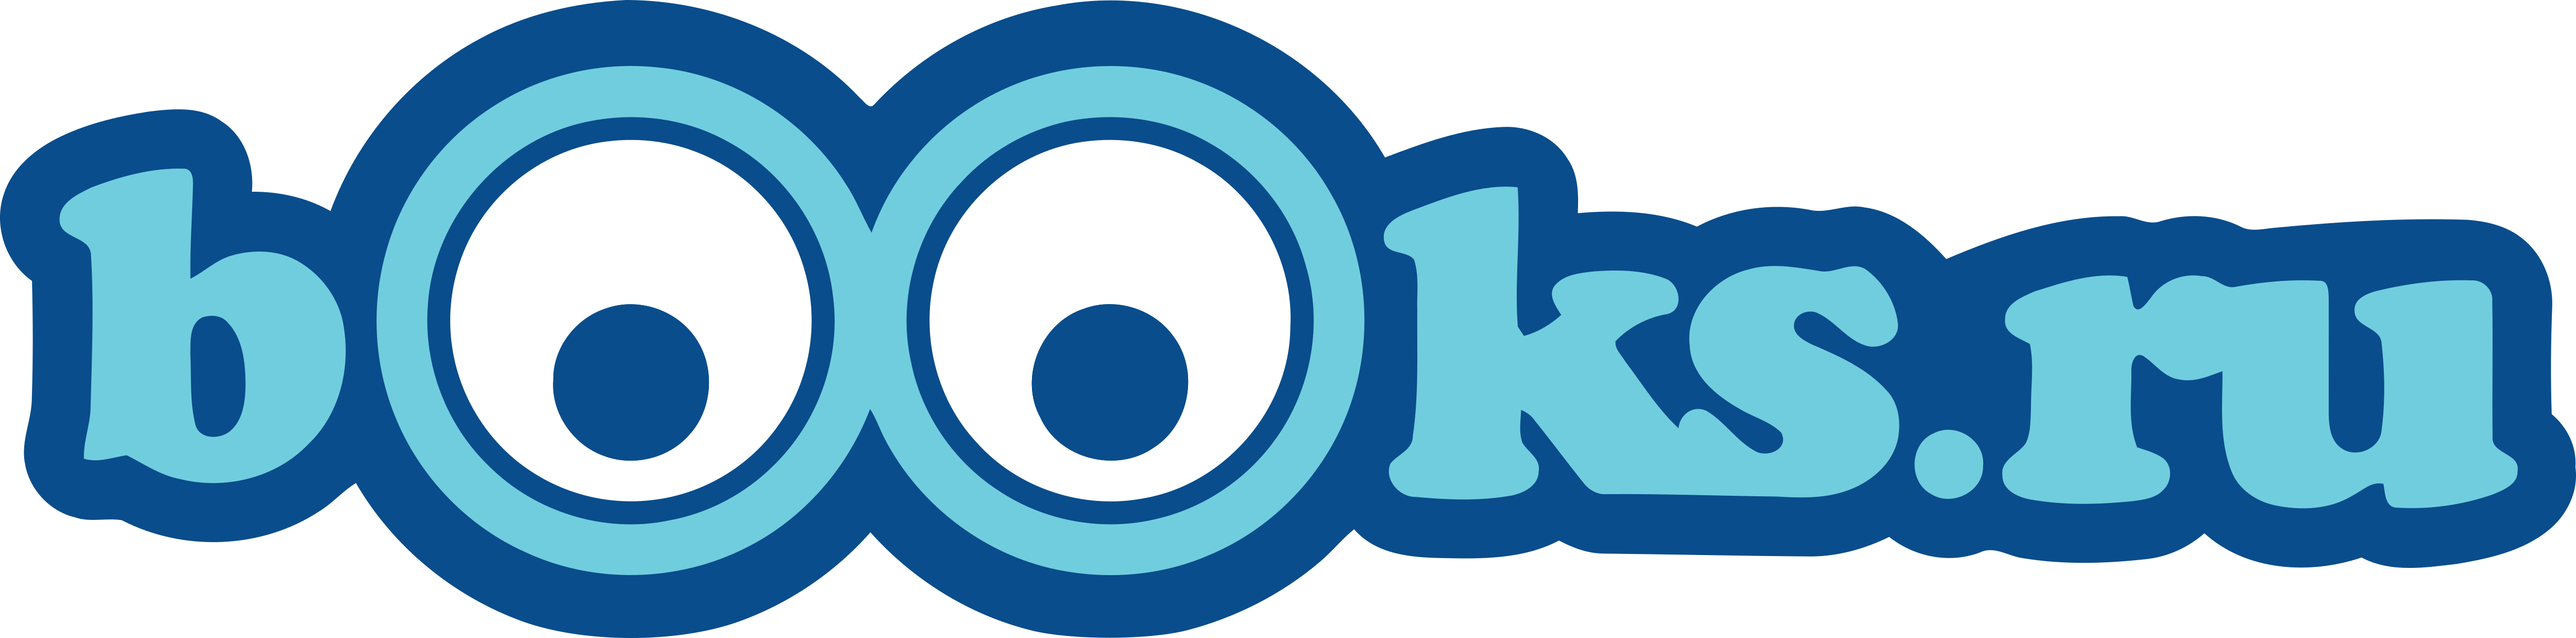 Book.ru. Логотип для книжного интернет магазина. Букс ру. Book.ru логотип. Motexc ru